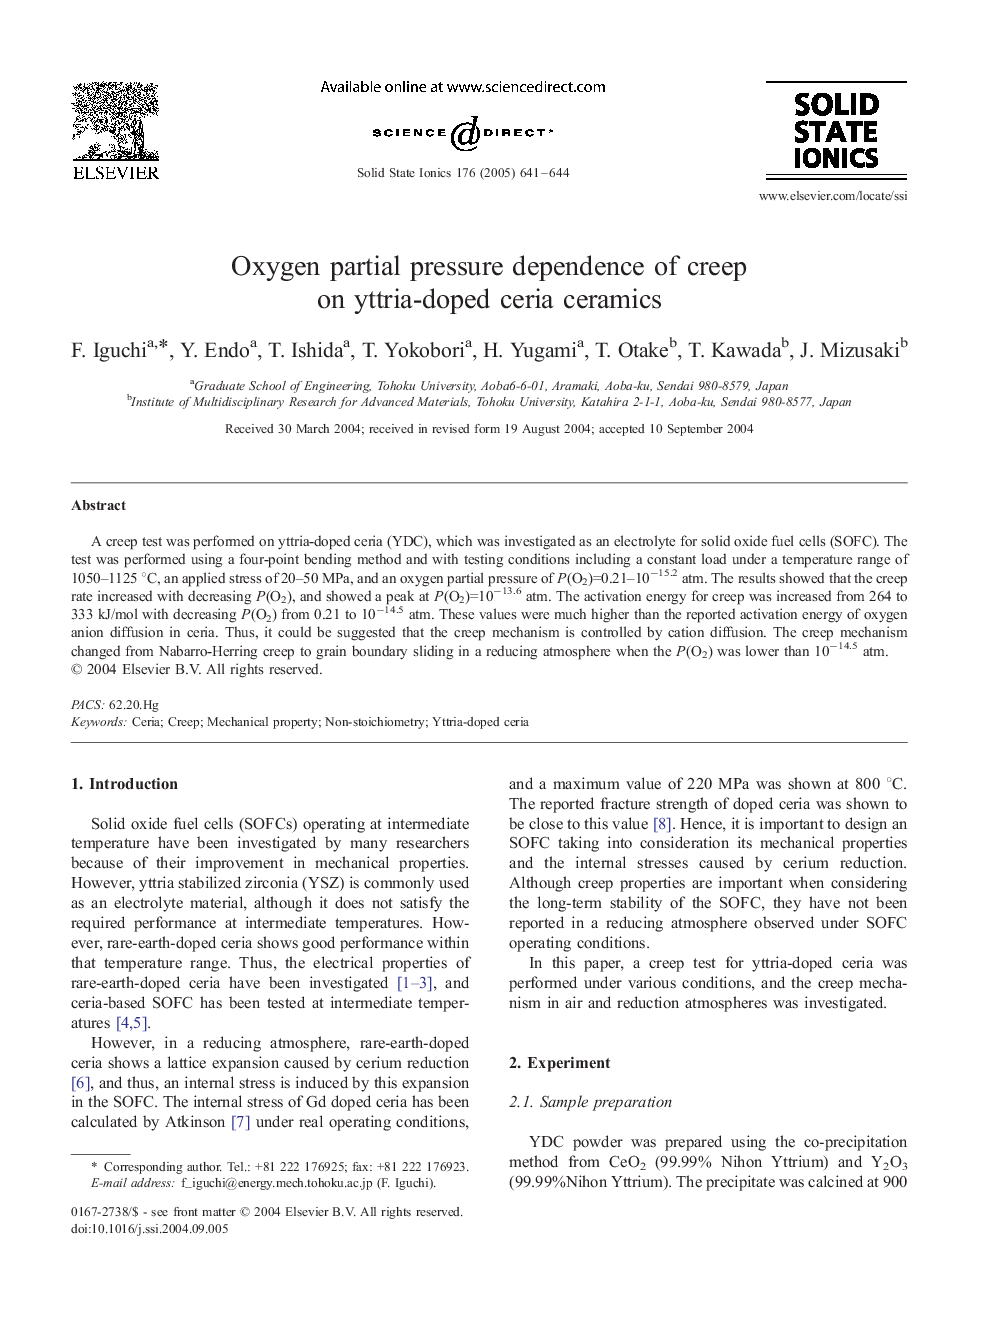 Oxygen partial pressure dependence of creep on yttria-doped ceria ceramics